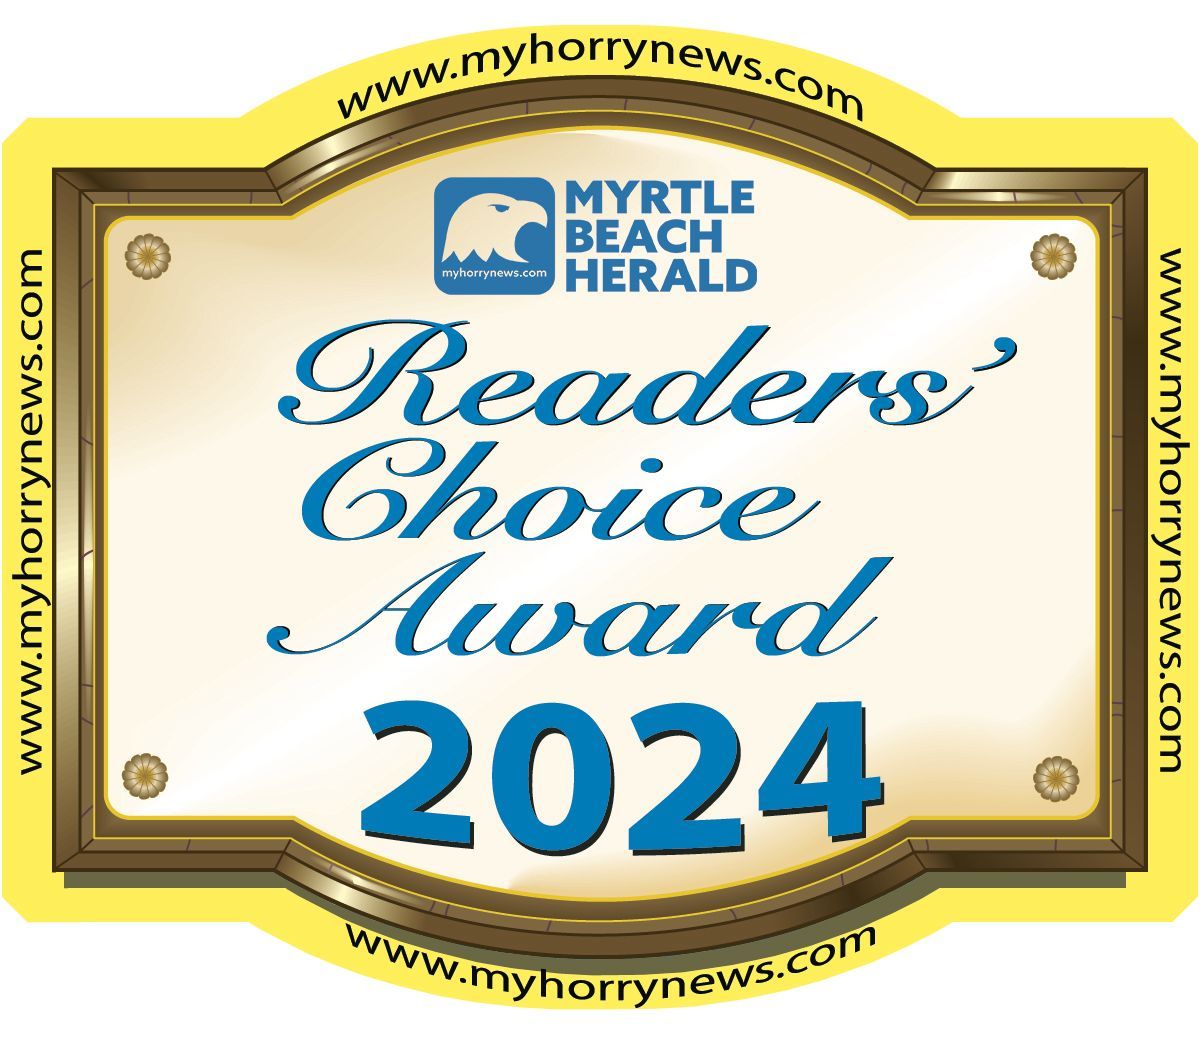 the myrtle beach herald readers choice award for 2024